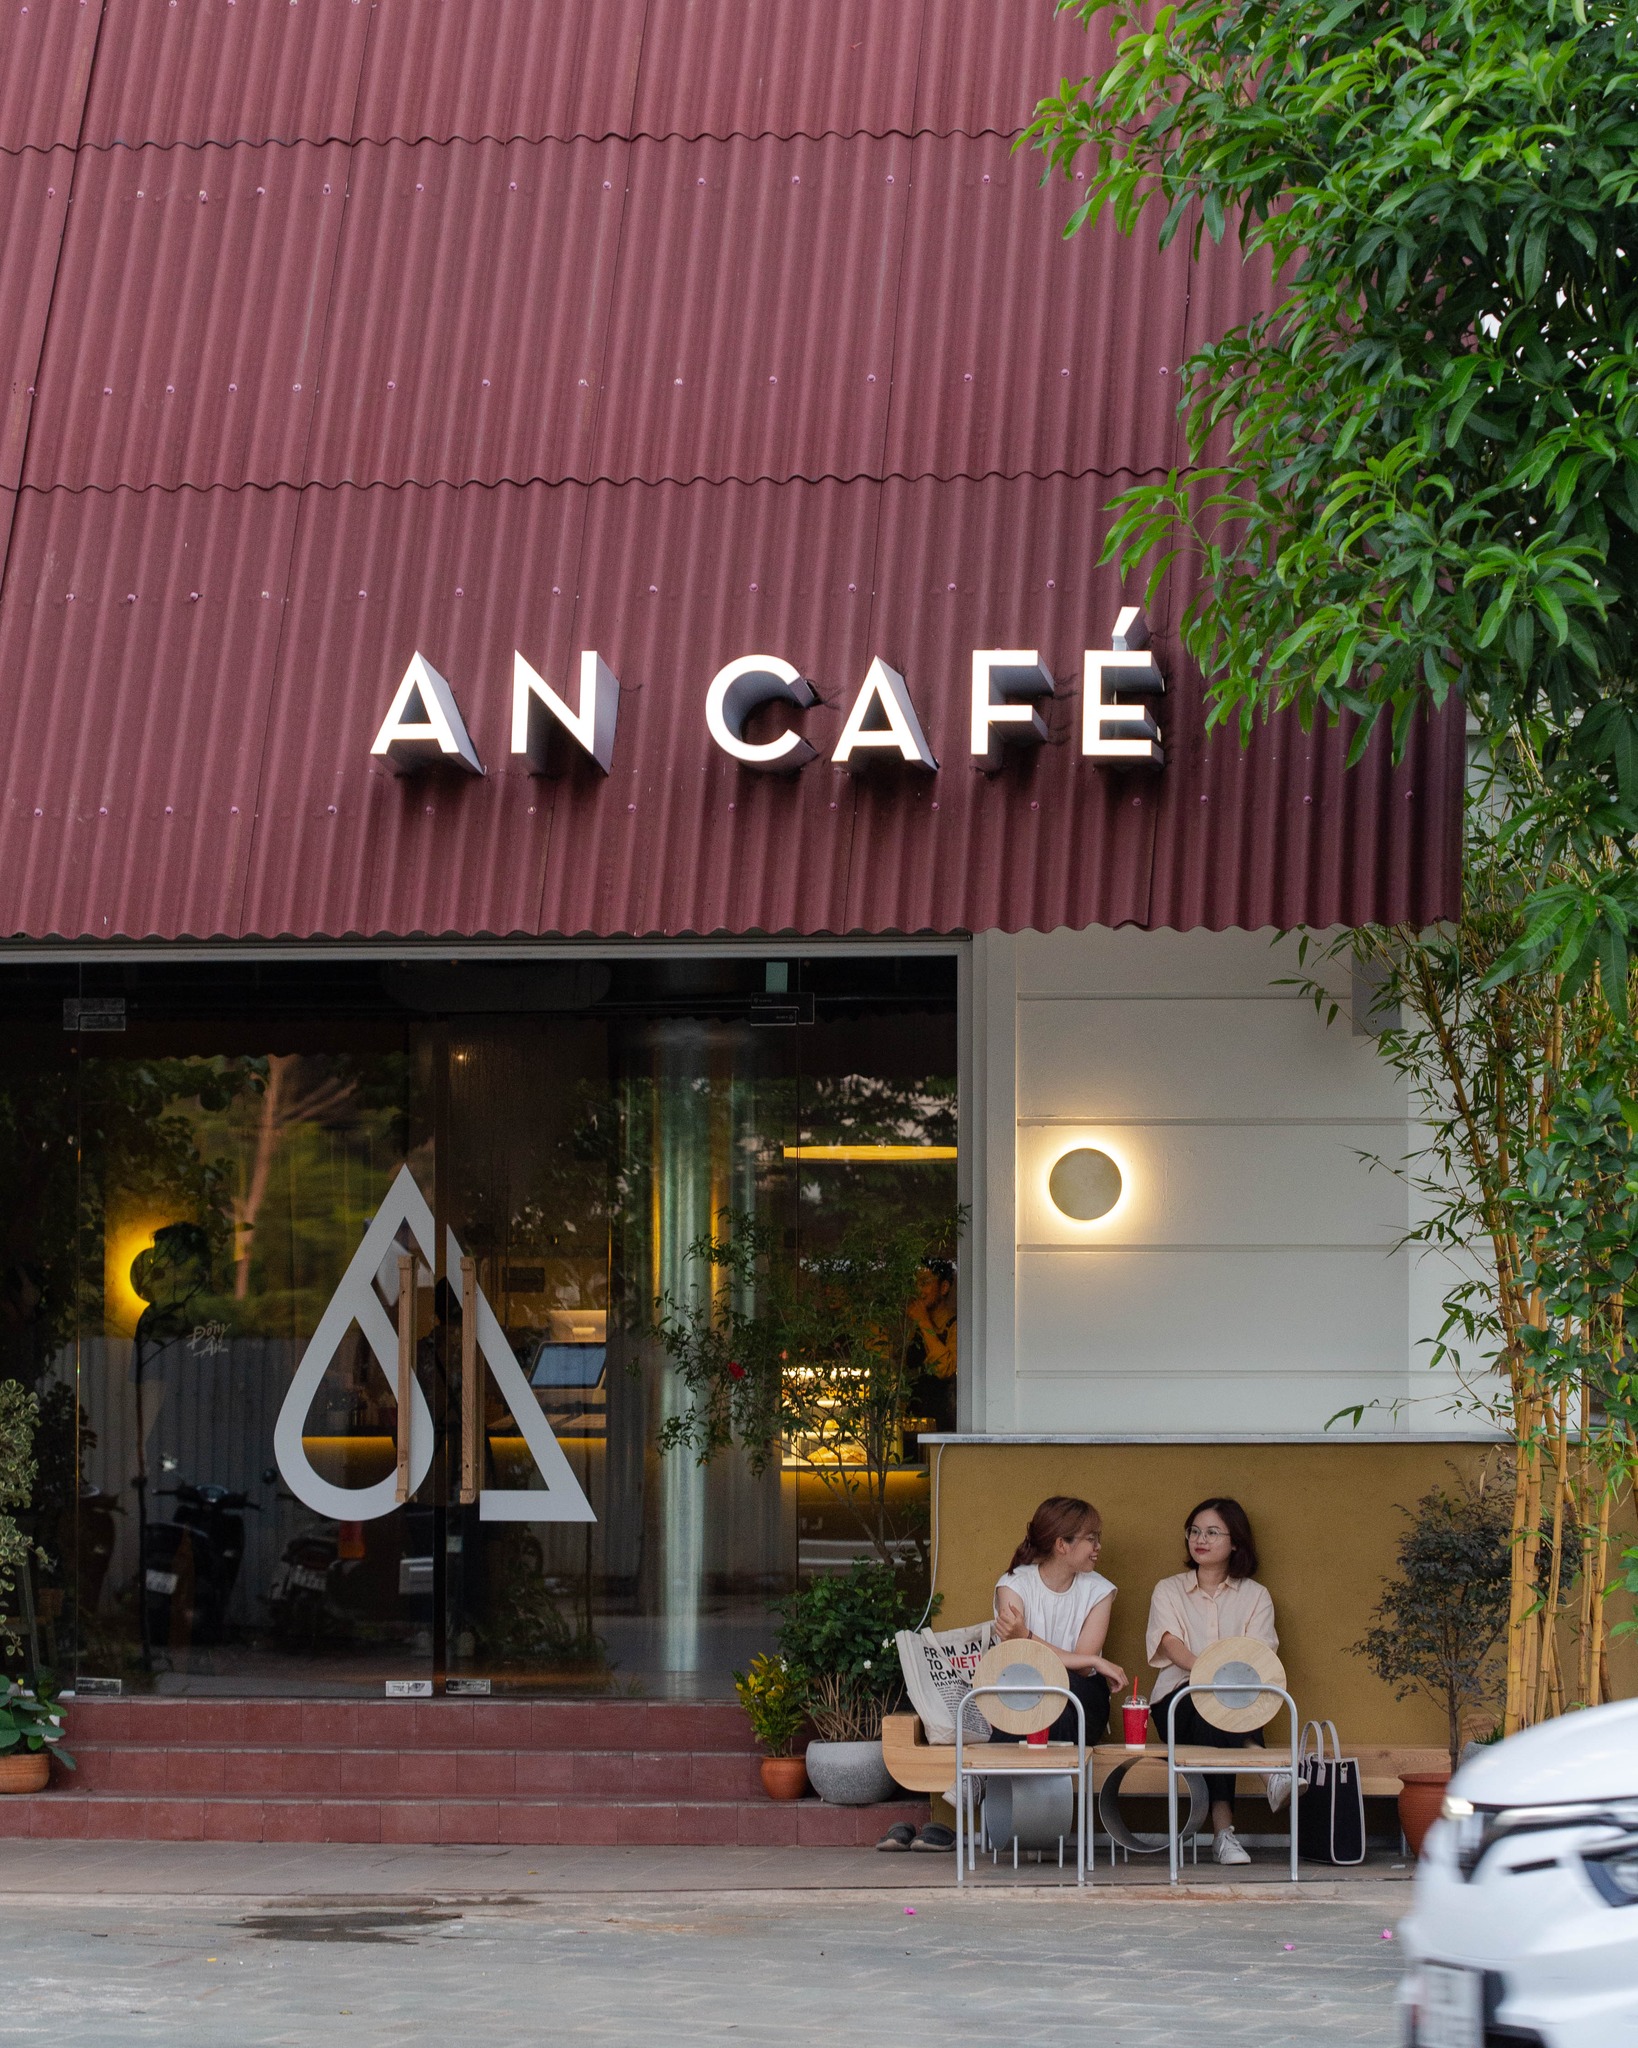 An Cafe